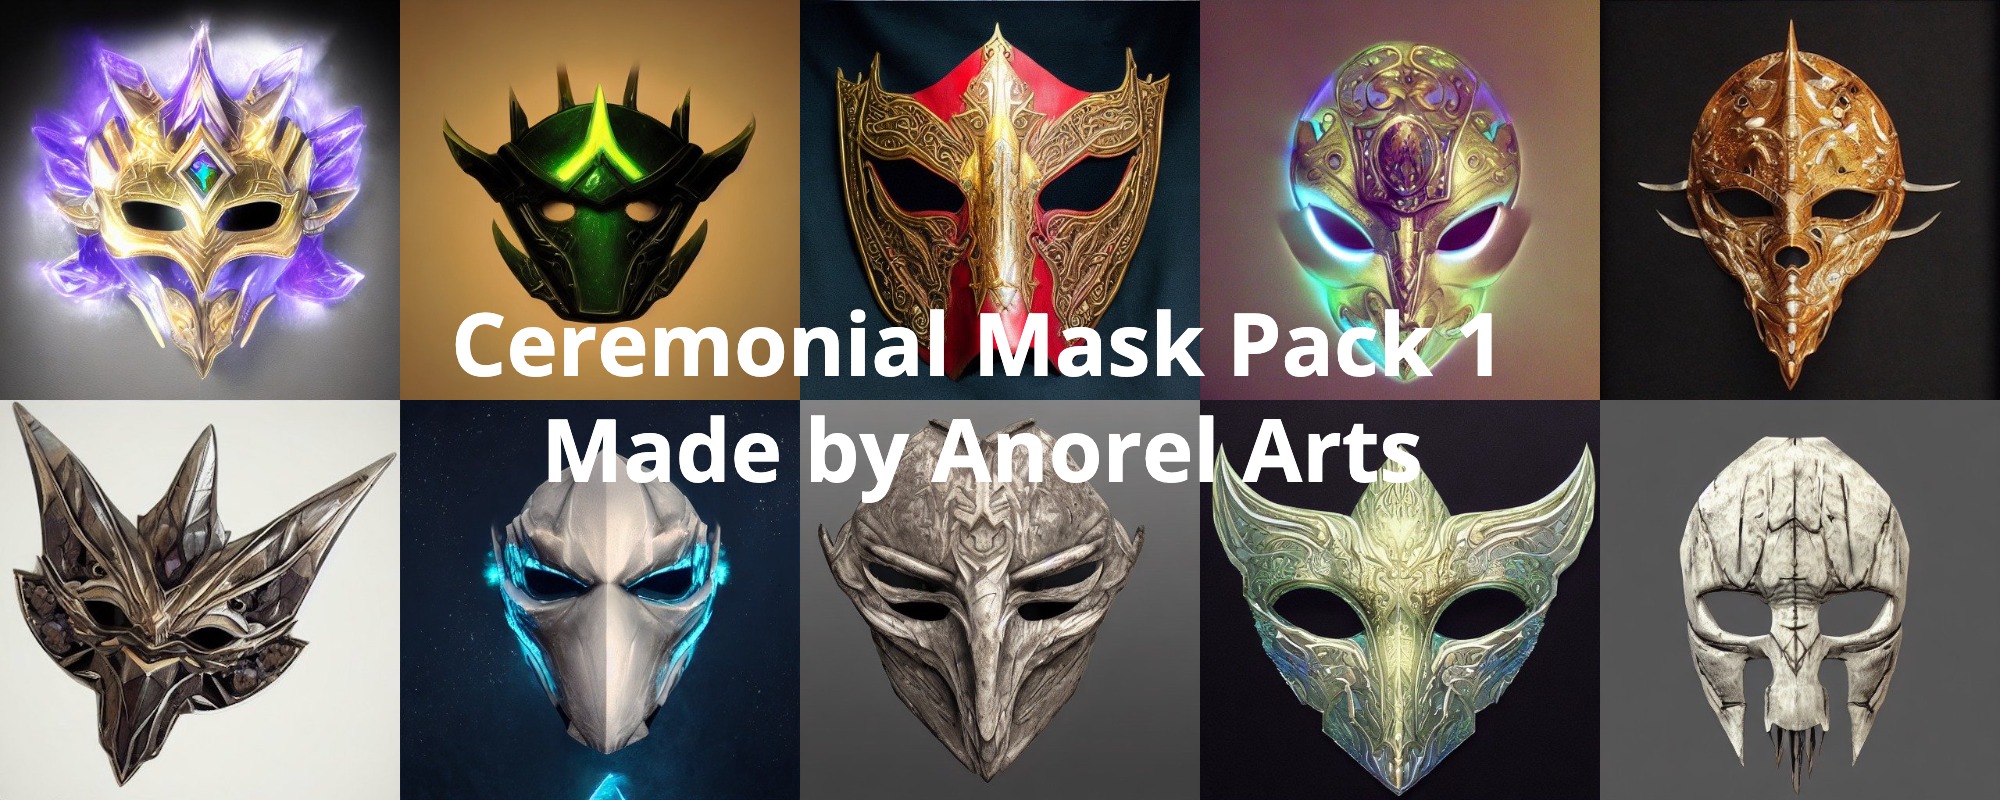 Ceremonial Mask Pack 1